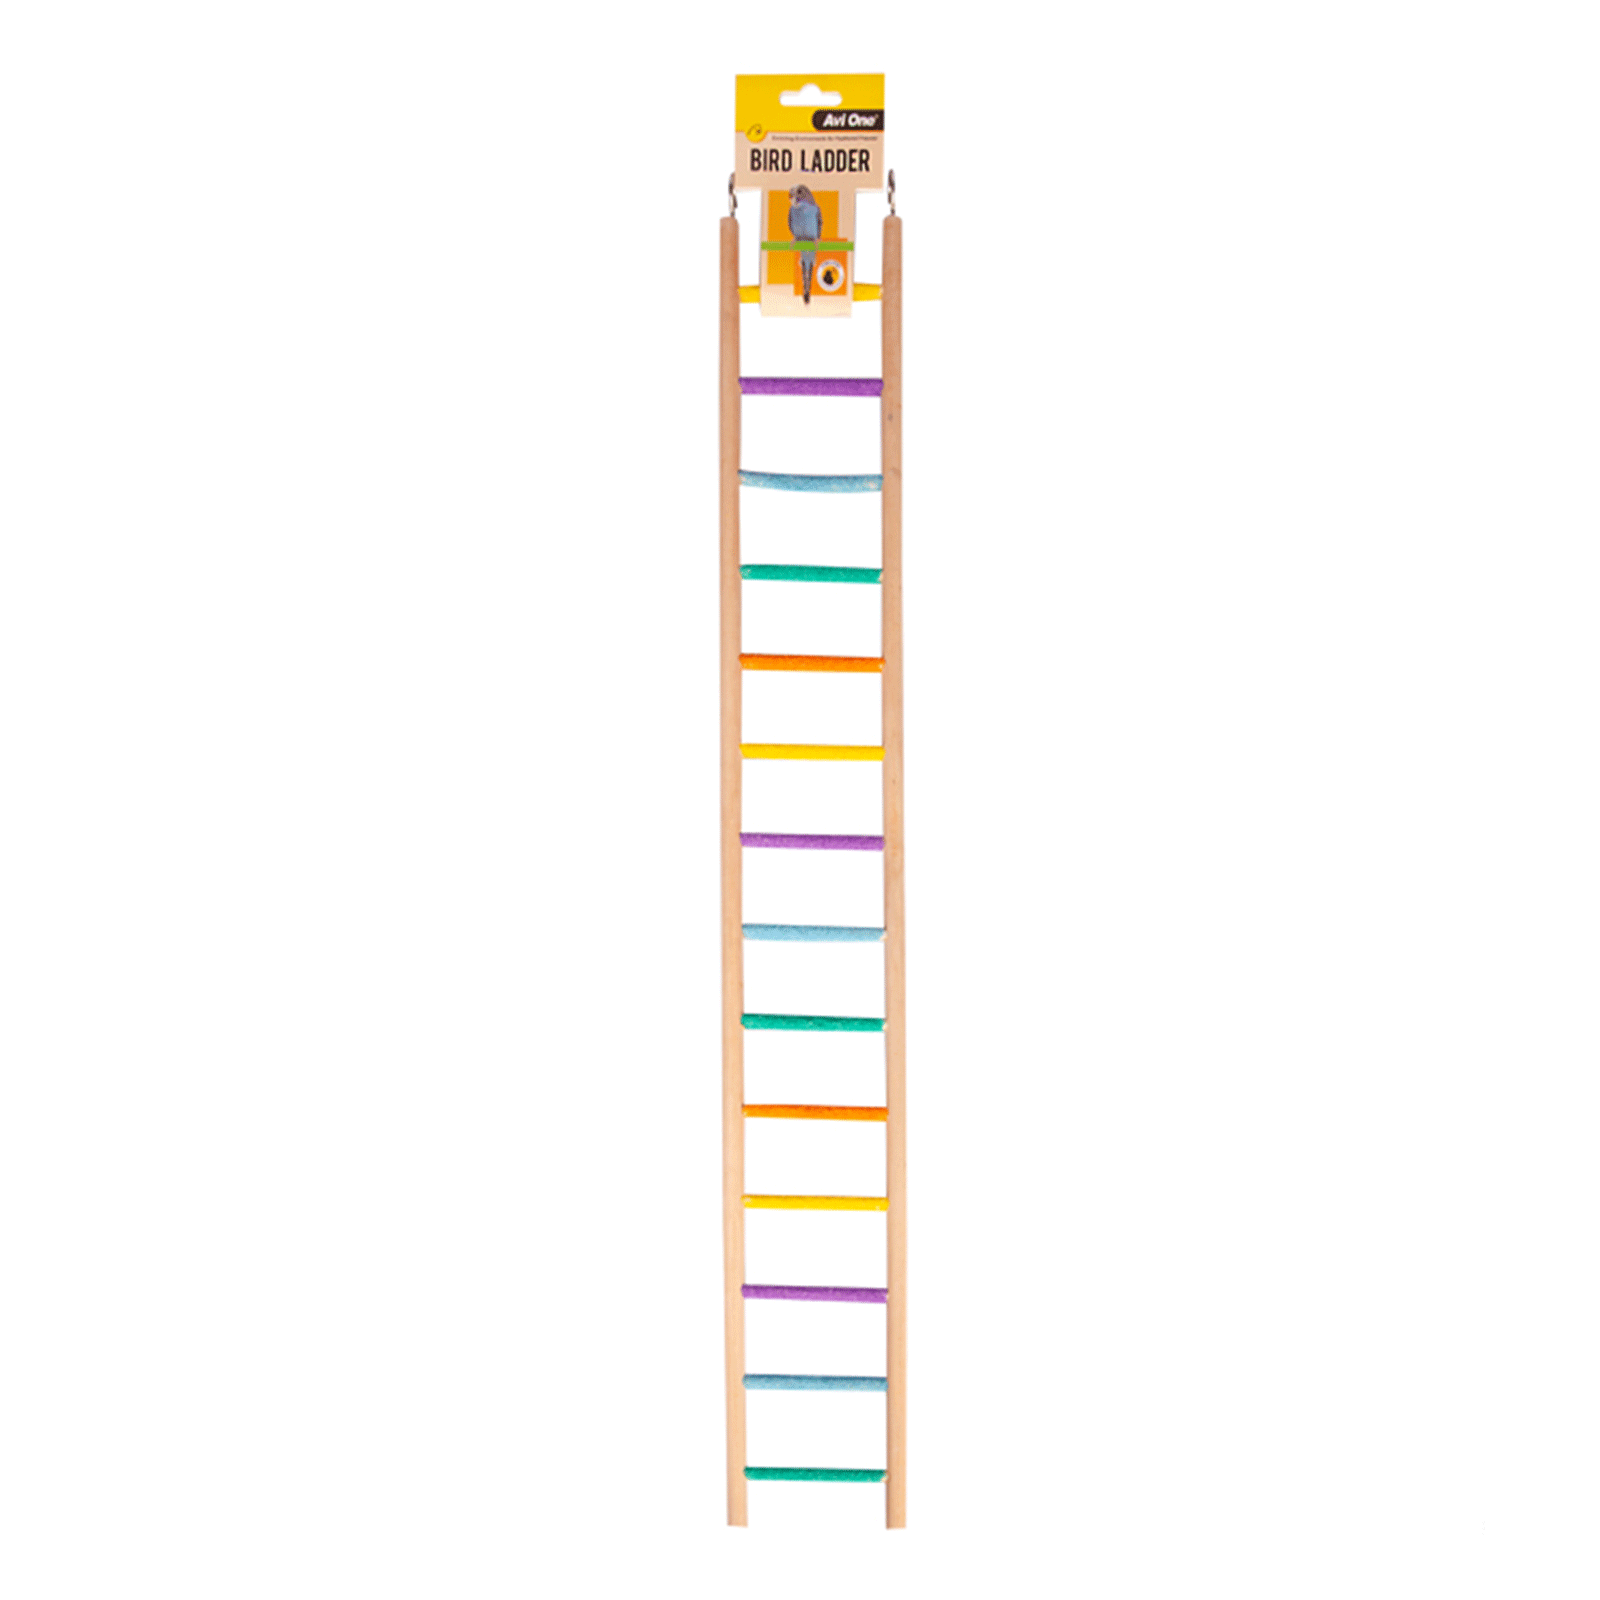 Avi One Bird Toy Ladder with Sand Steps